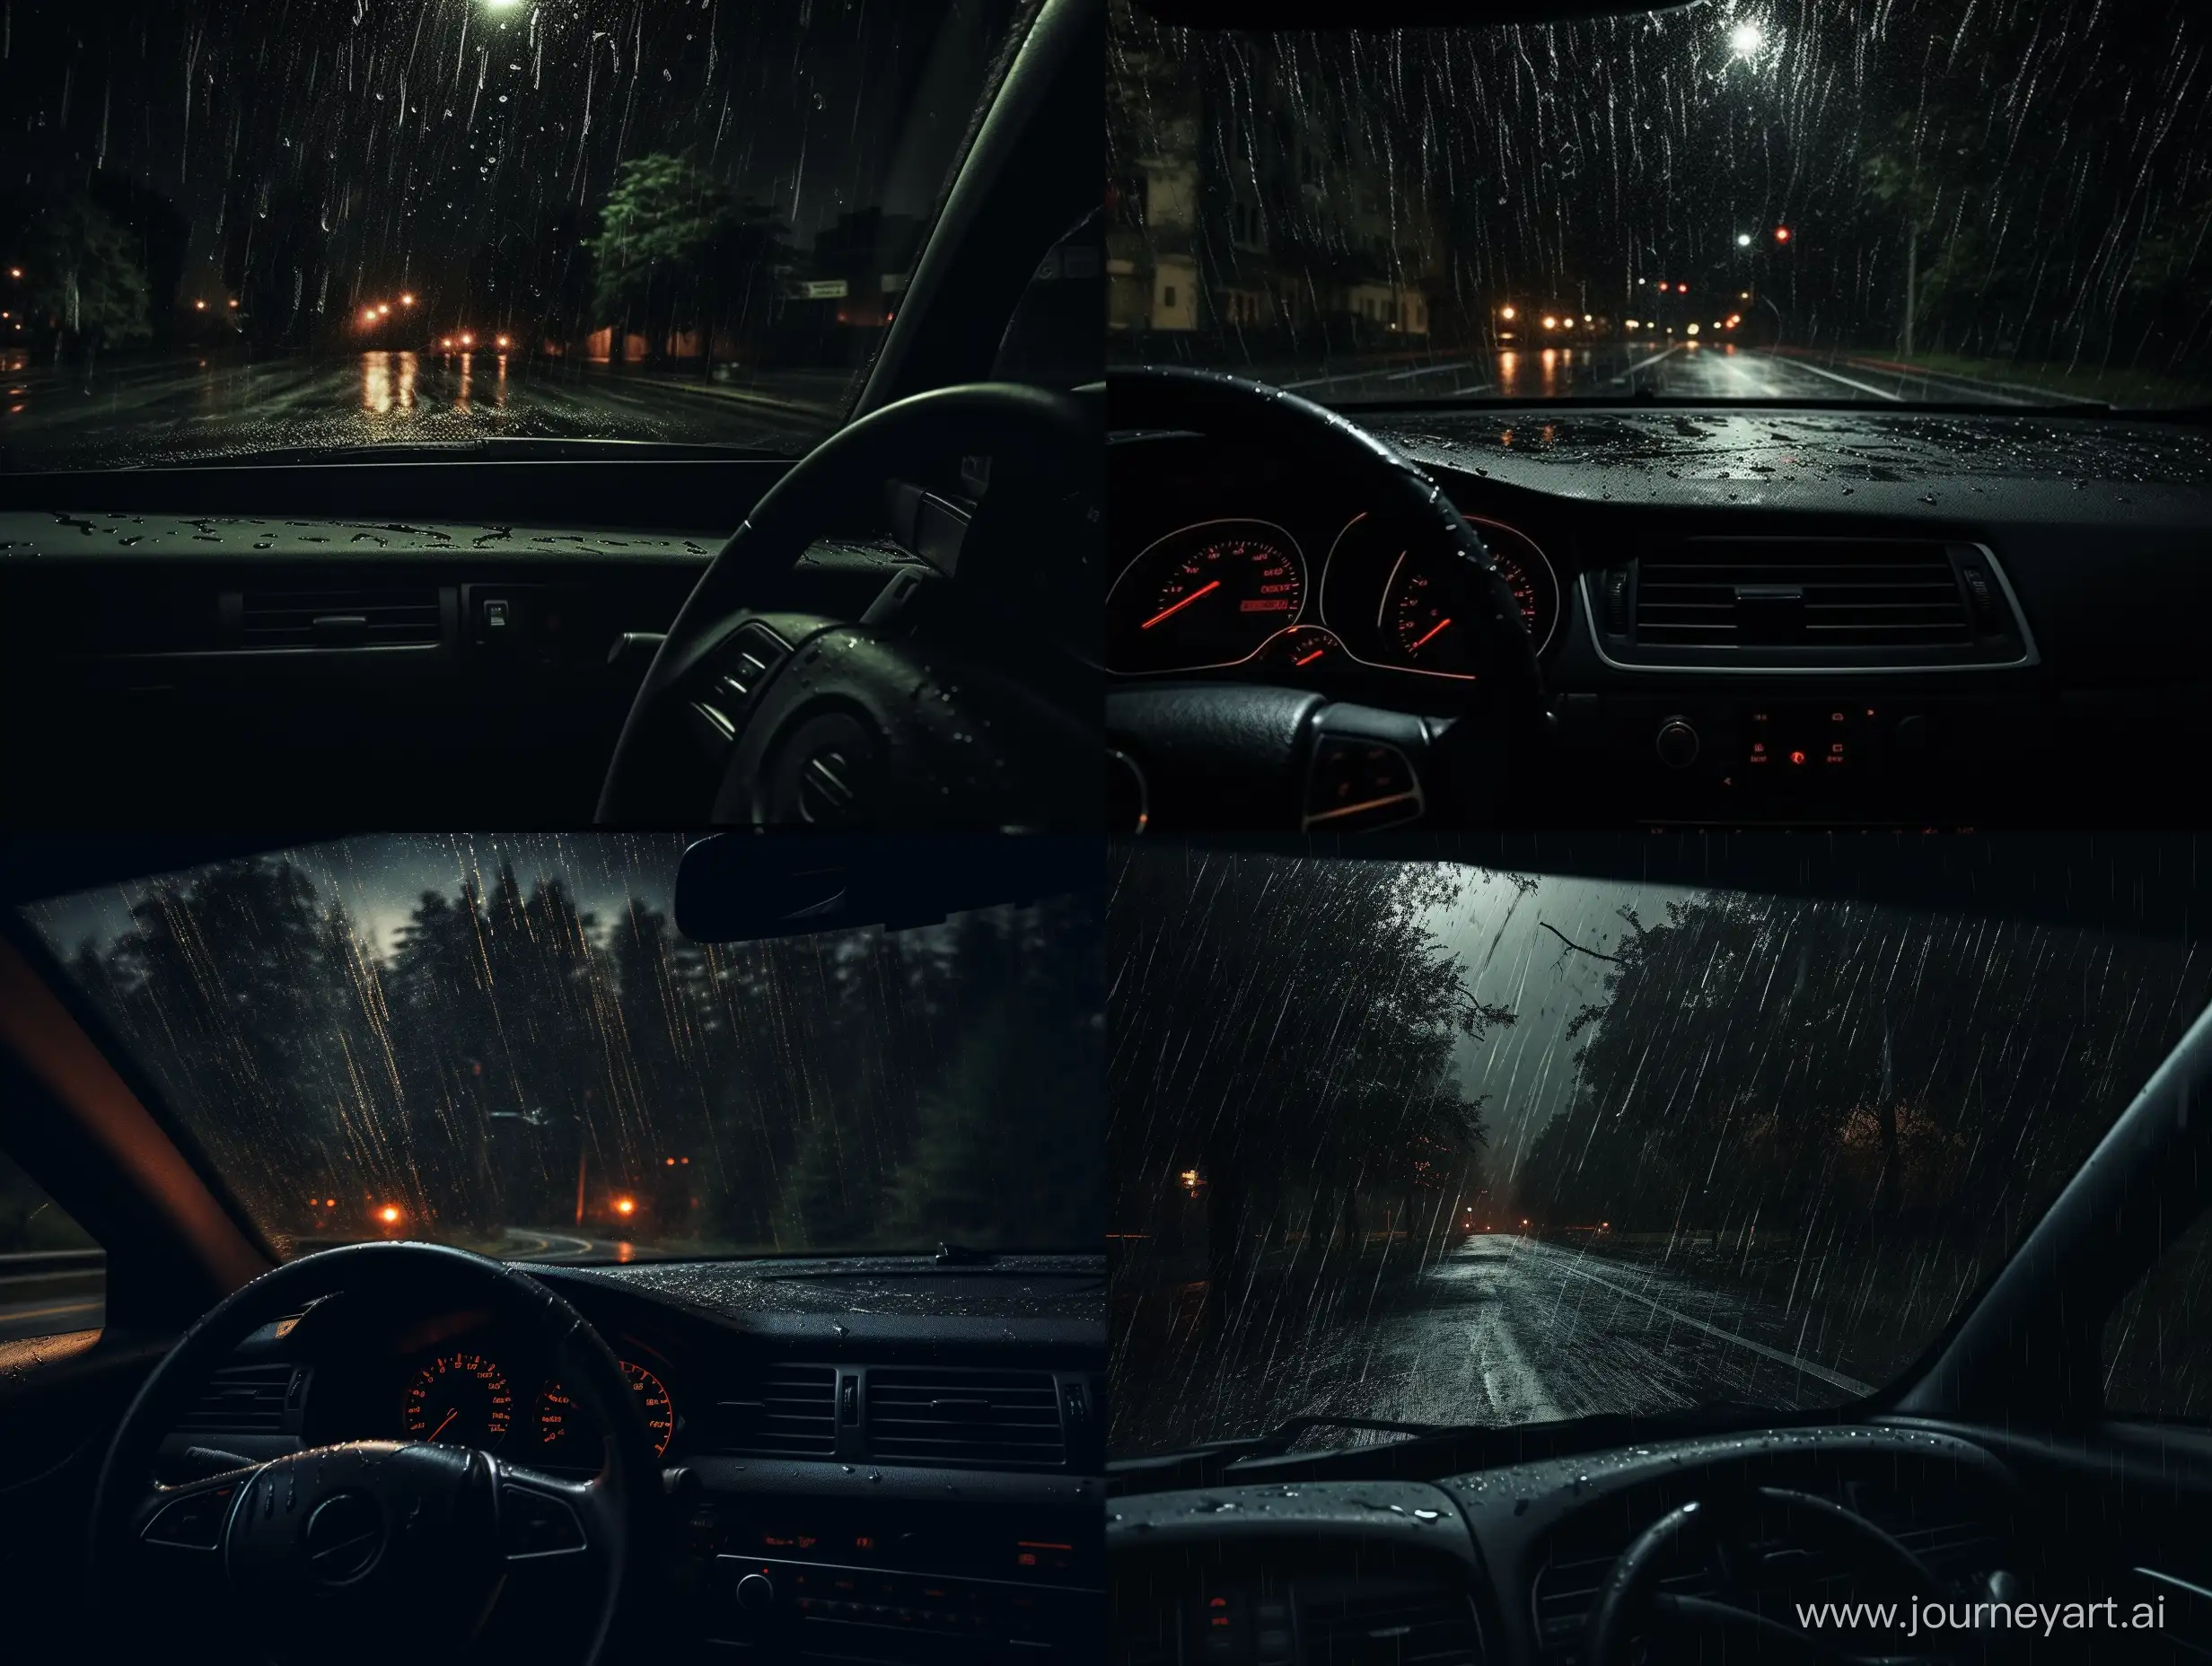 Lonely-Drive-in-Rain-Man-Driving-Car-in-Dark-Street-with-Broken-Radio